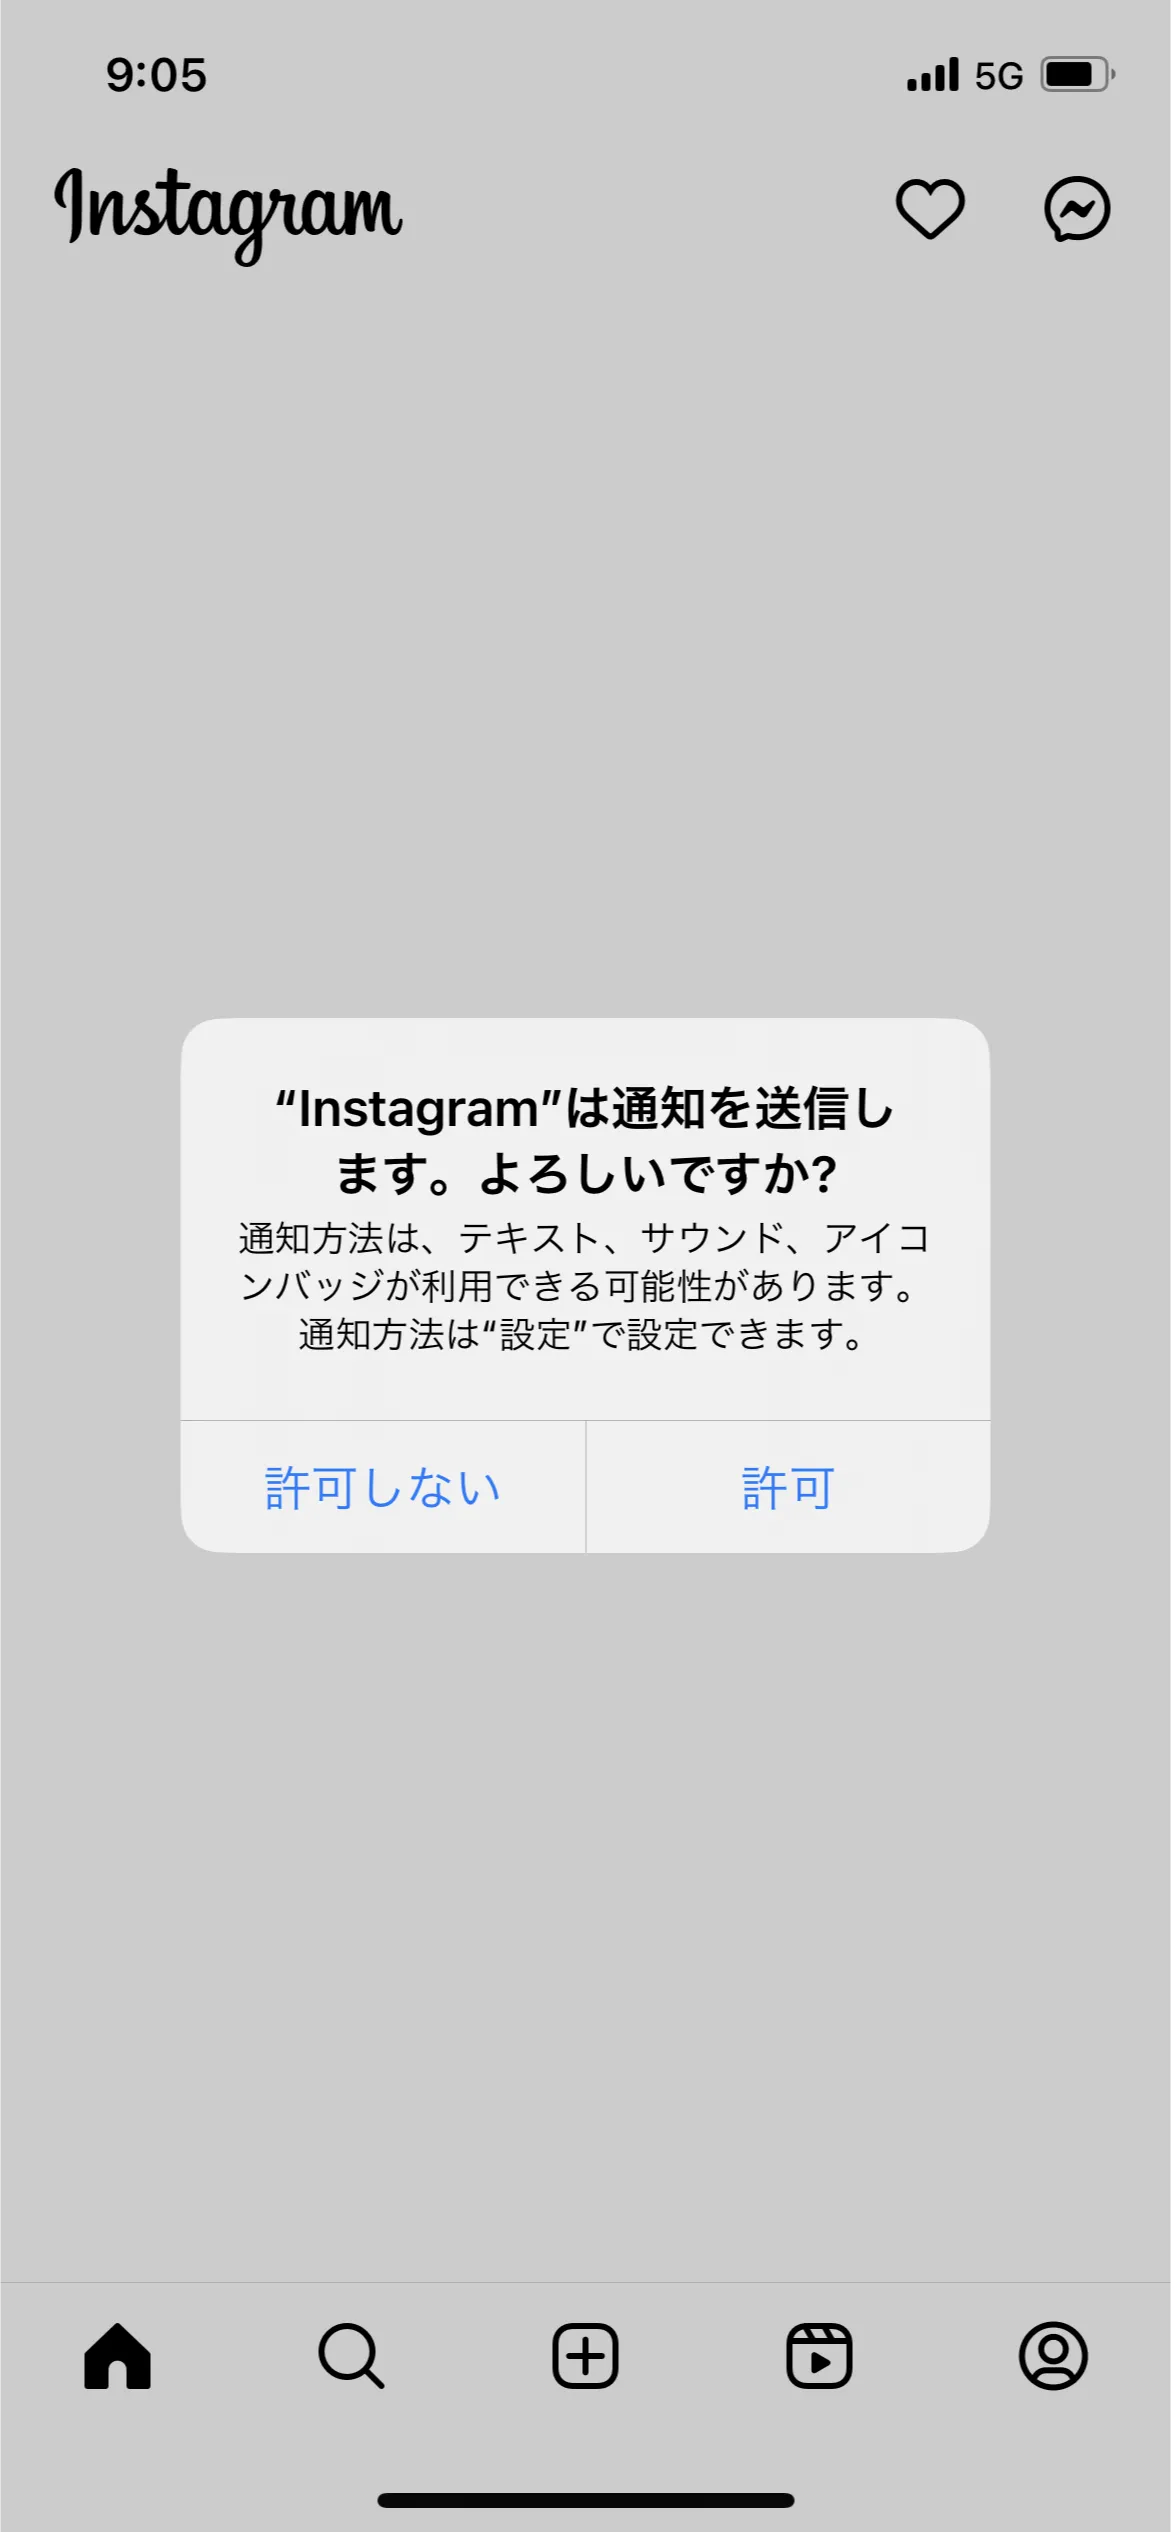 Instagram オンボーディング screen